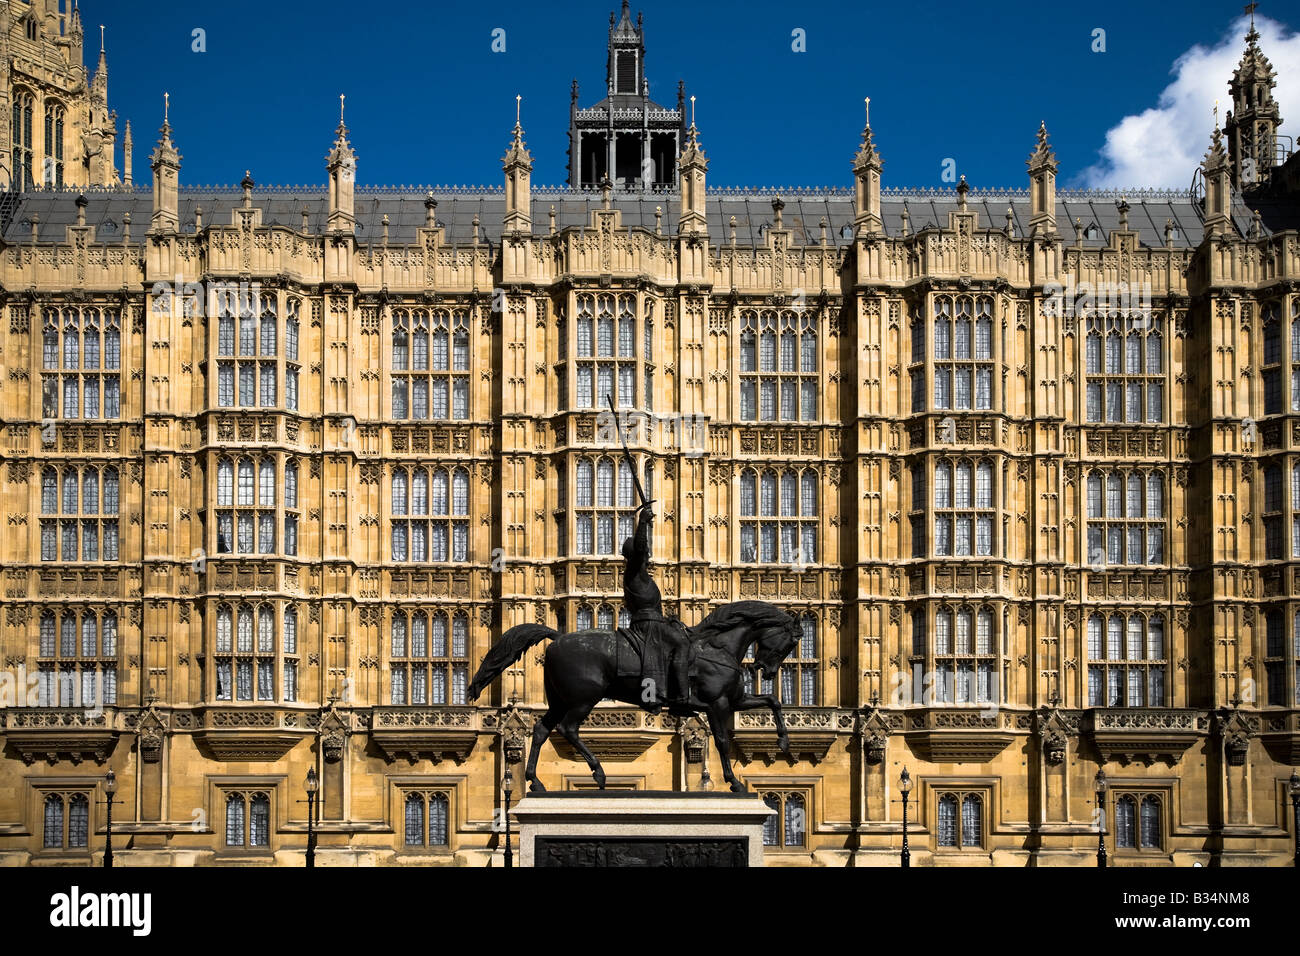 Palace of Westminster, London, UK Stock Photo